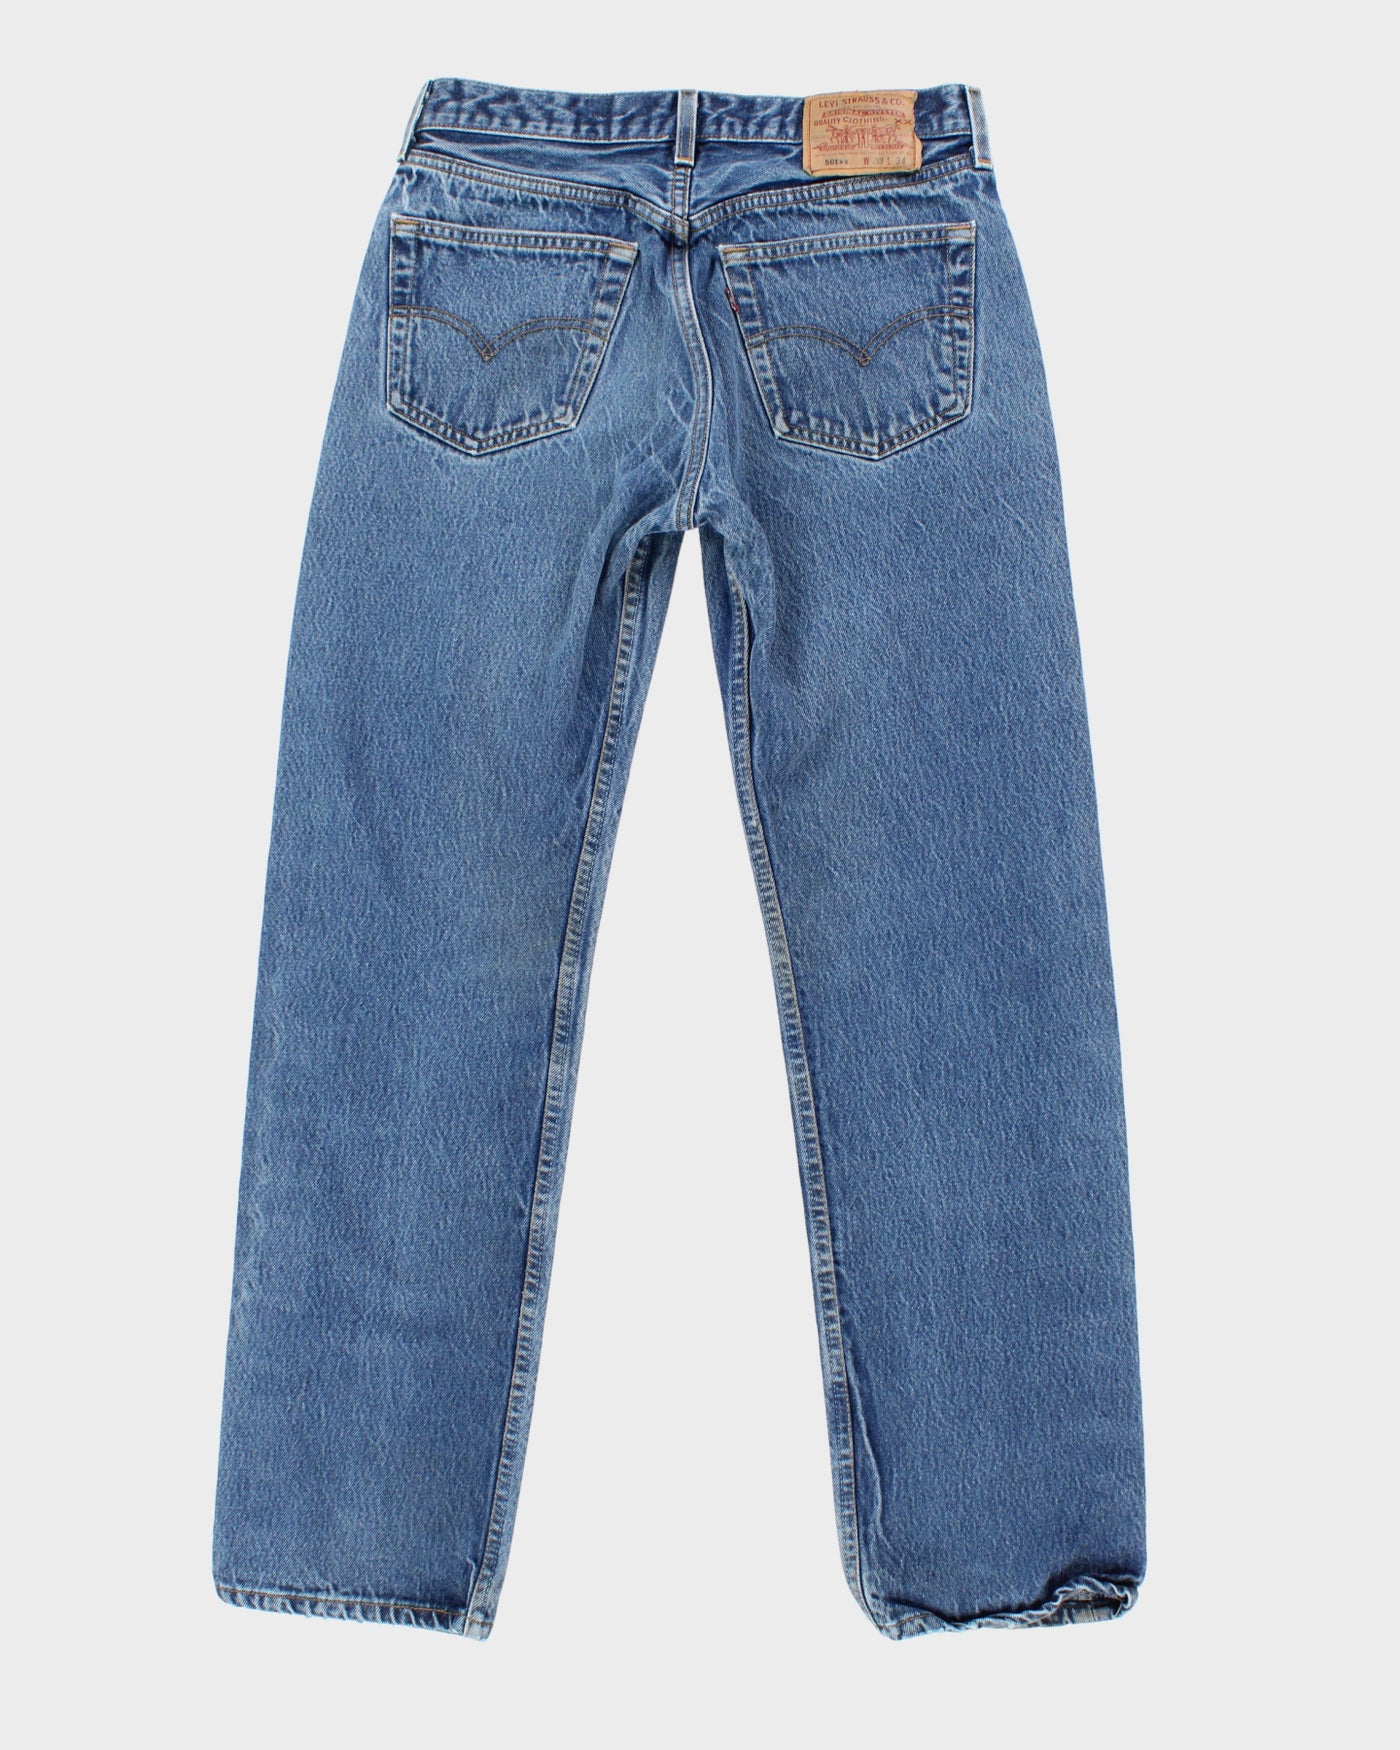 Vintage 90s Levi's Medium Wash Blue Denim 501xx Jeans - W30 L29